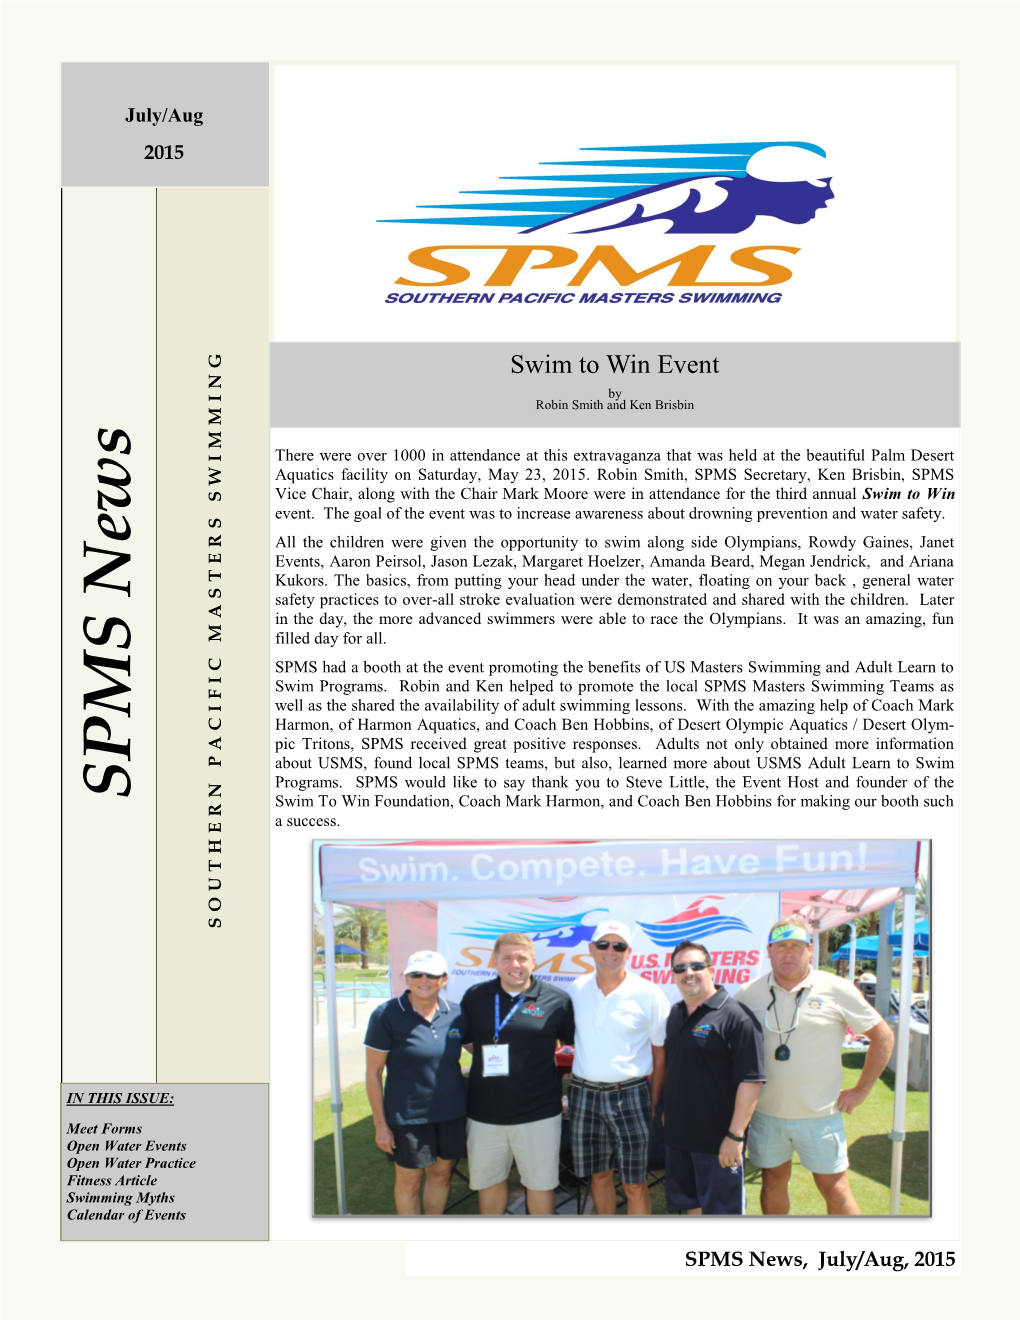 SPMS Swimming News